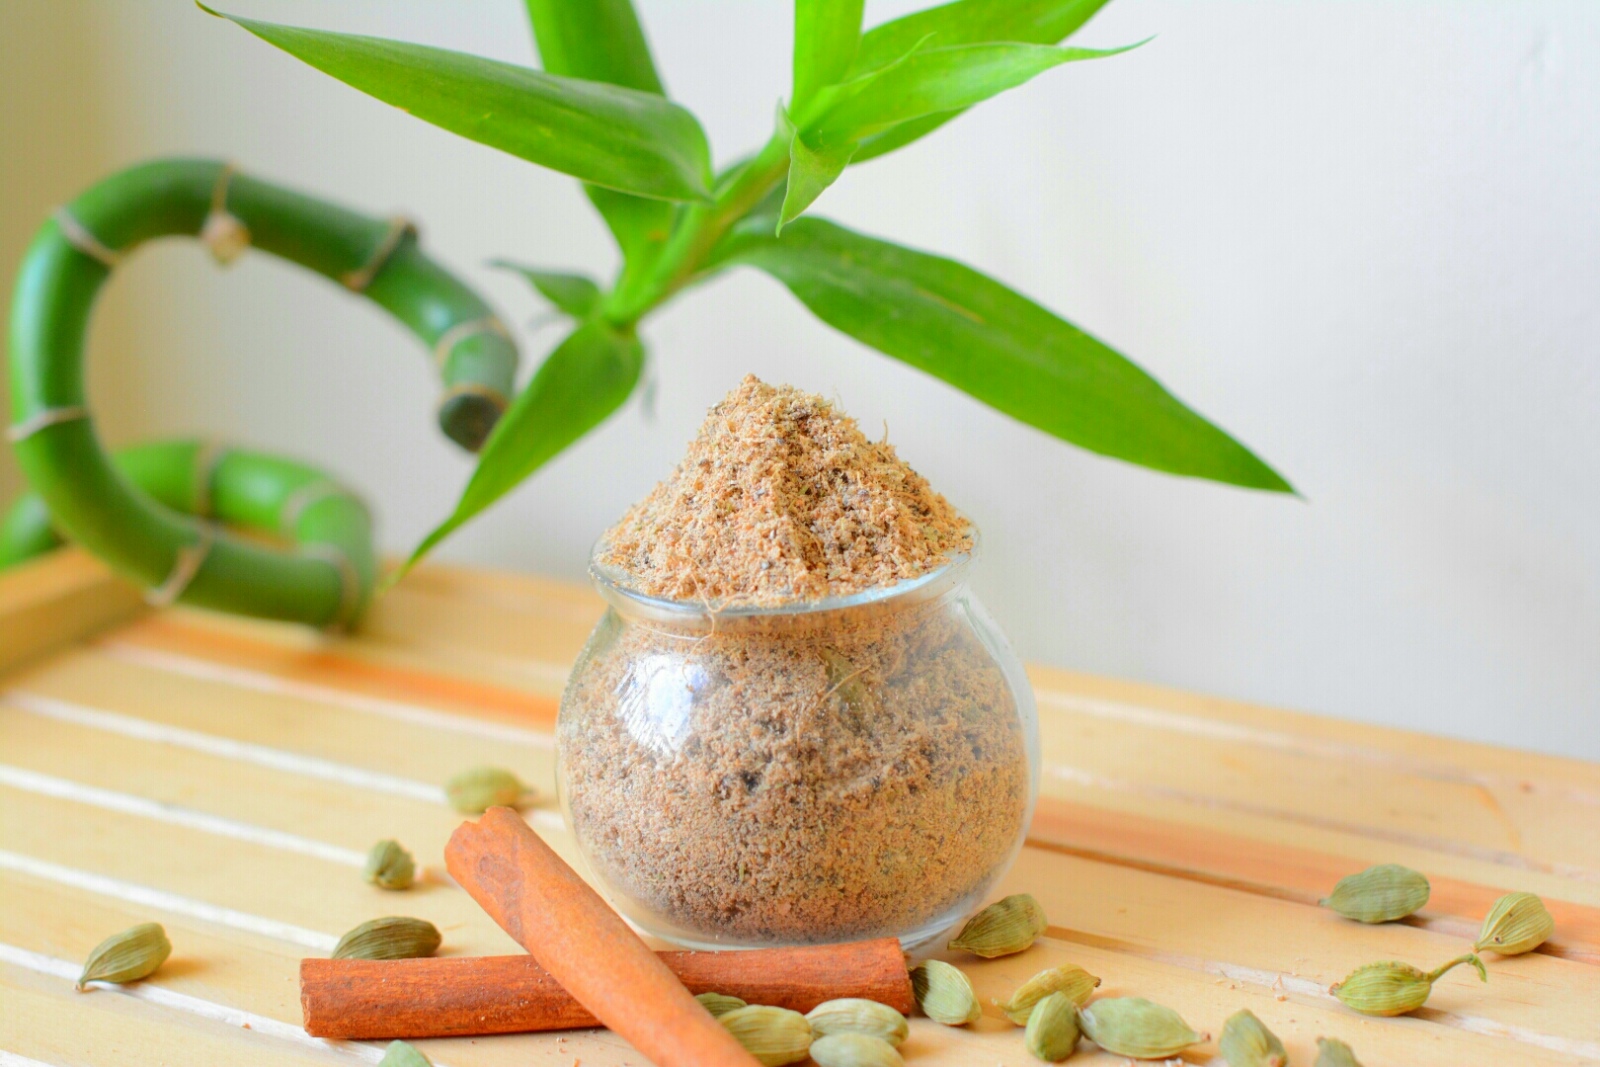 चाय मसाला पाउडर रेसिपी - Indian Tea Masala Powder Recipe 